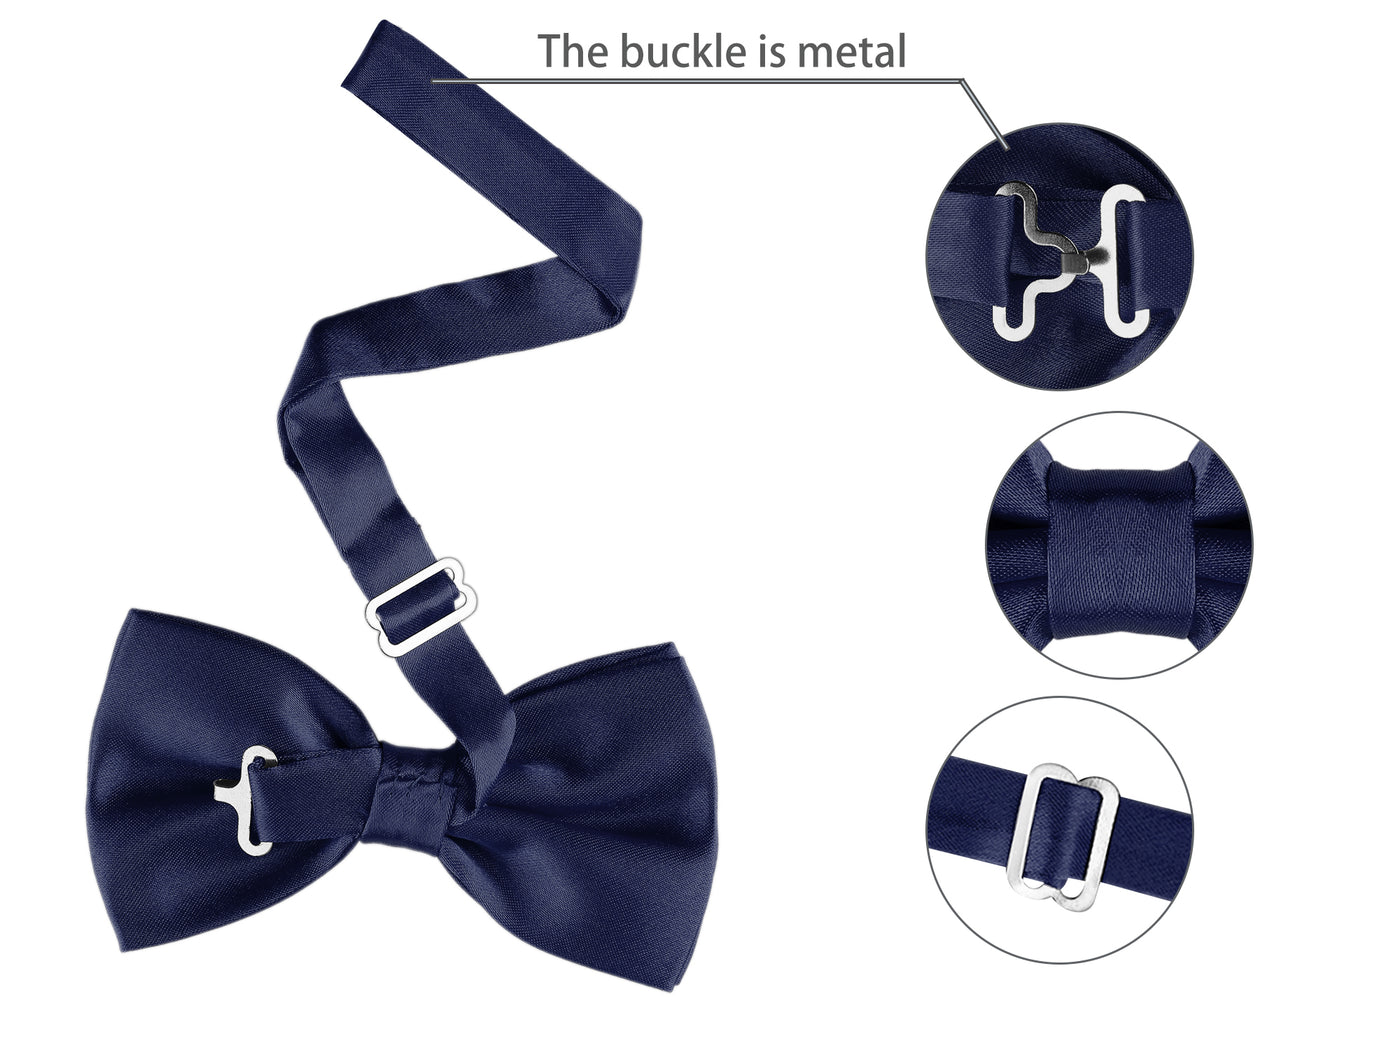 Allegra K Pre-tied Solid Adjustable Bowtie Classic Tuxedo Wedding Bow Ties